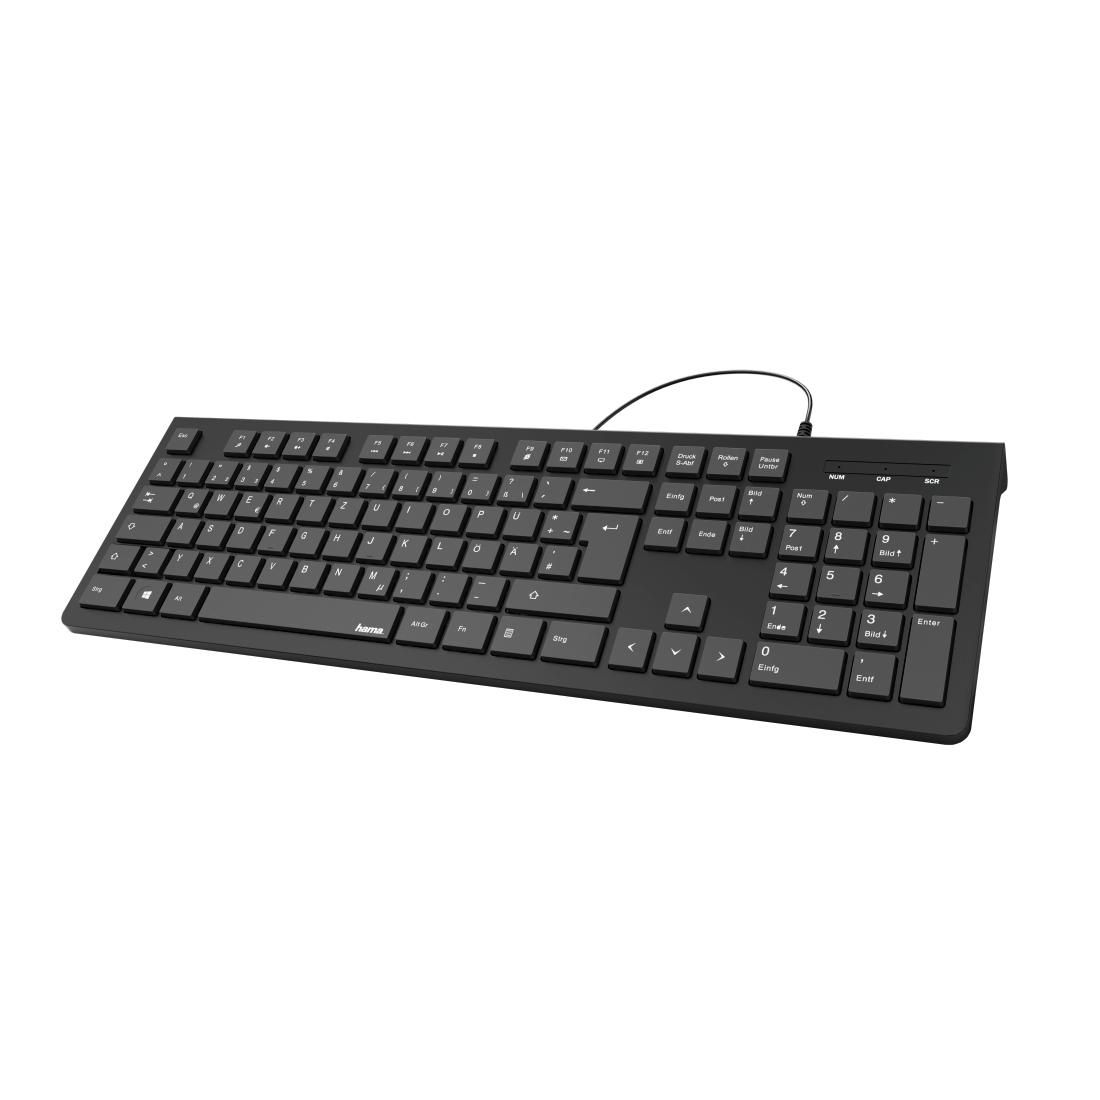 Hama 182681 W128275056 Kc-200 Keyboard Usb Qwertz 